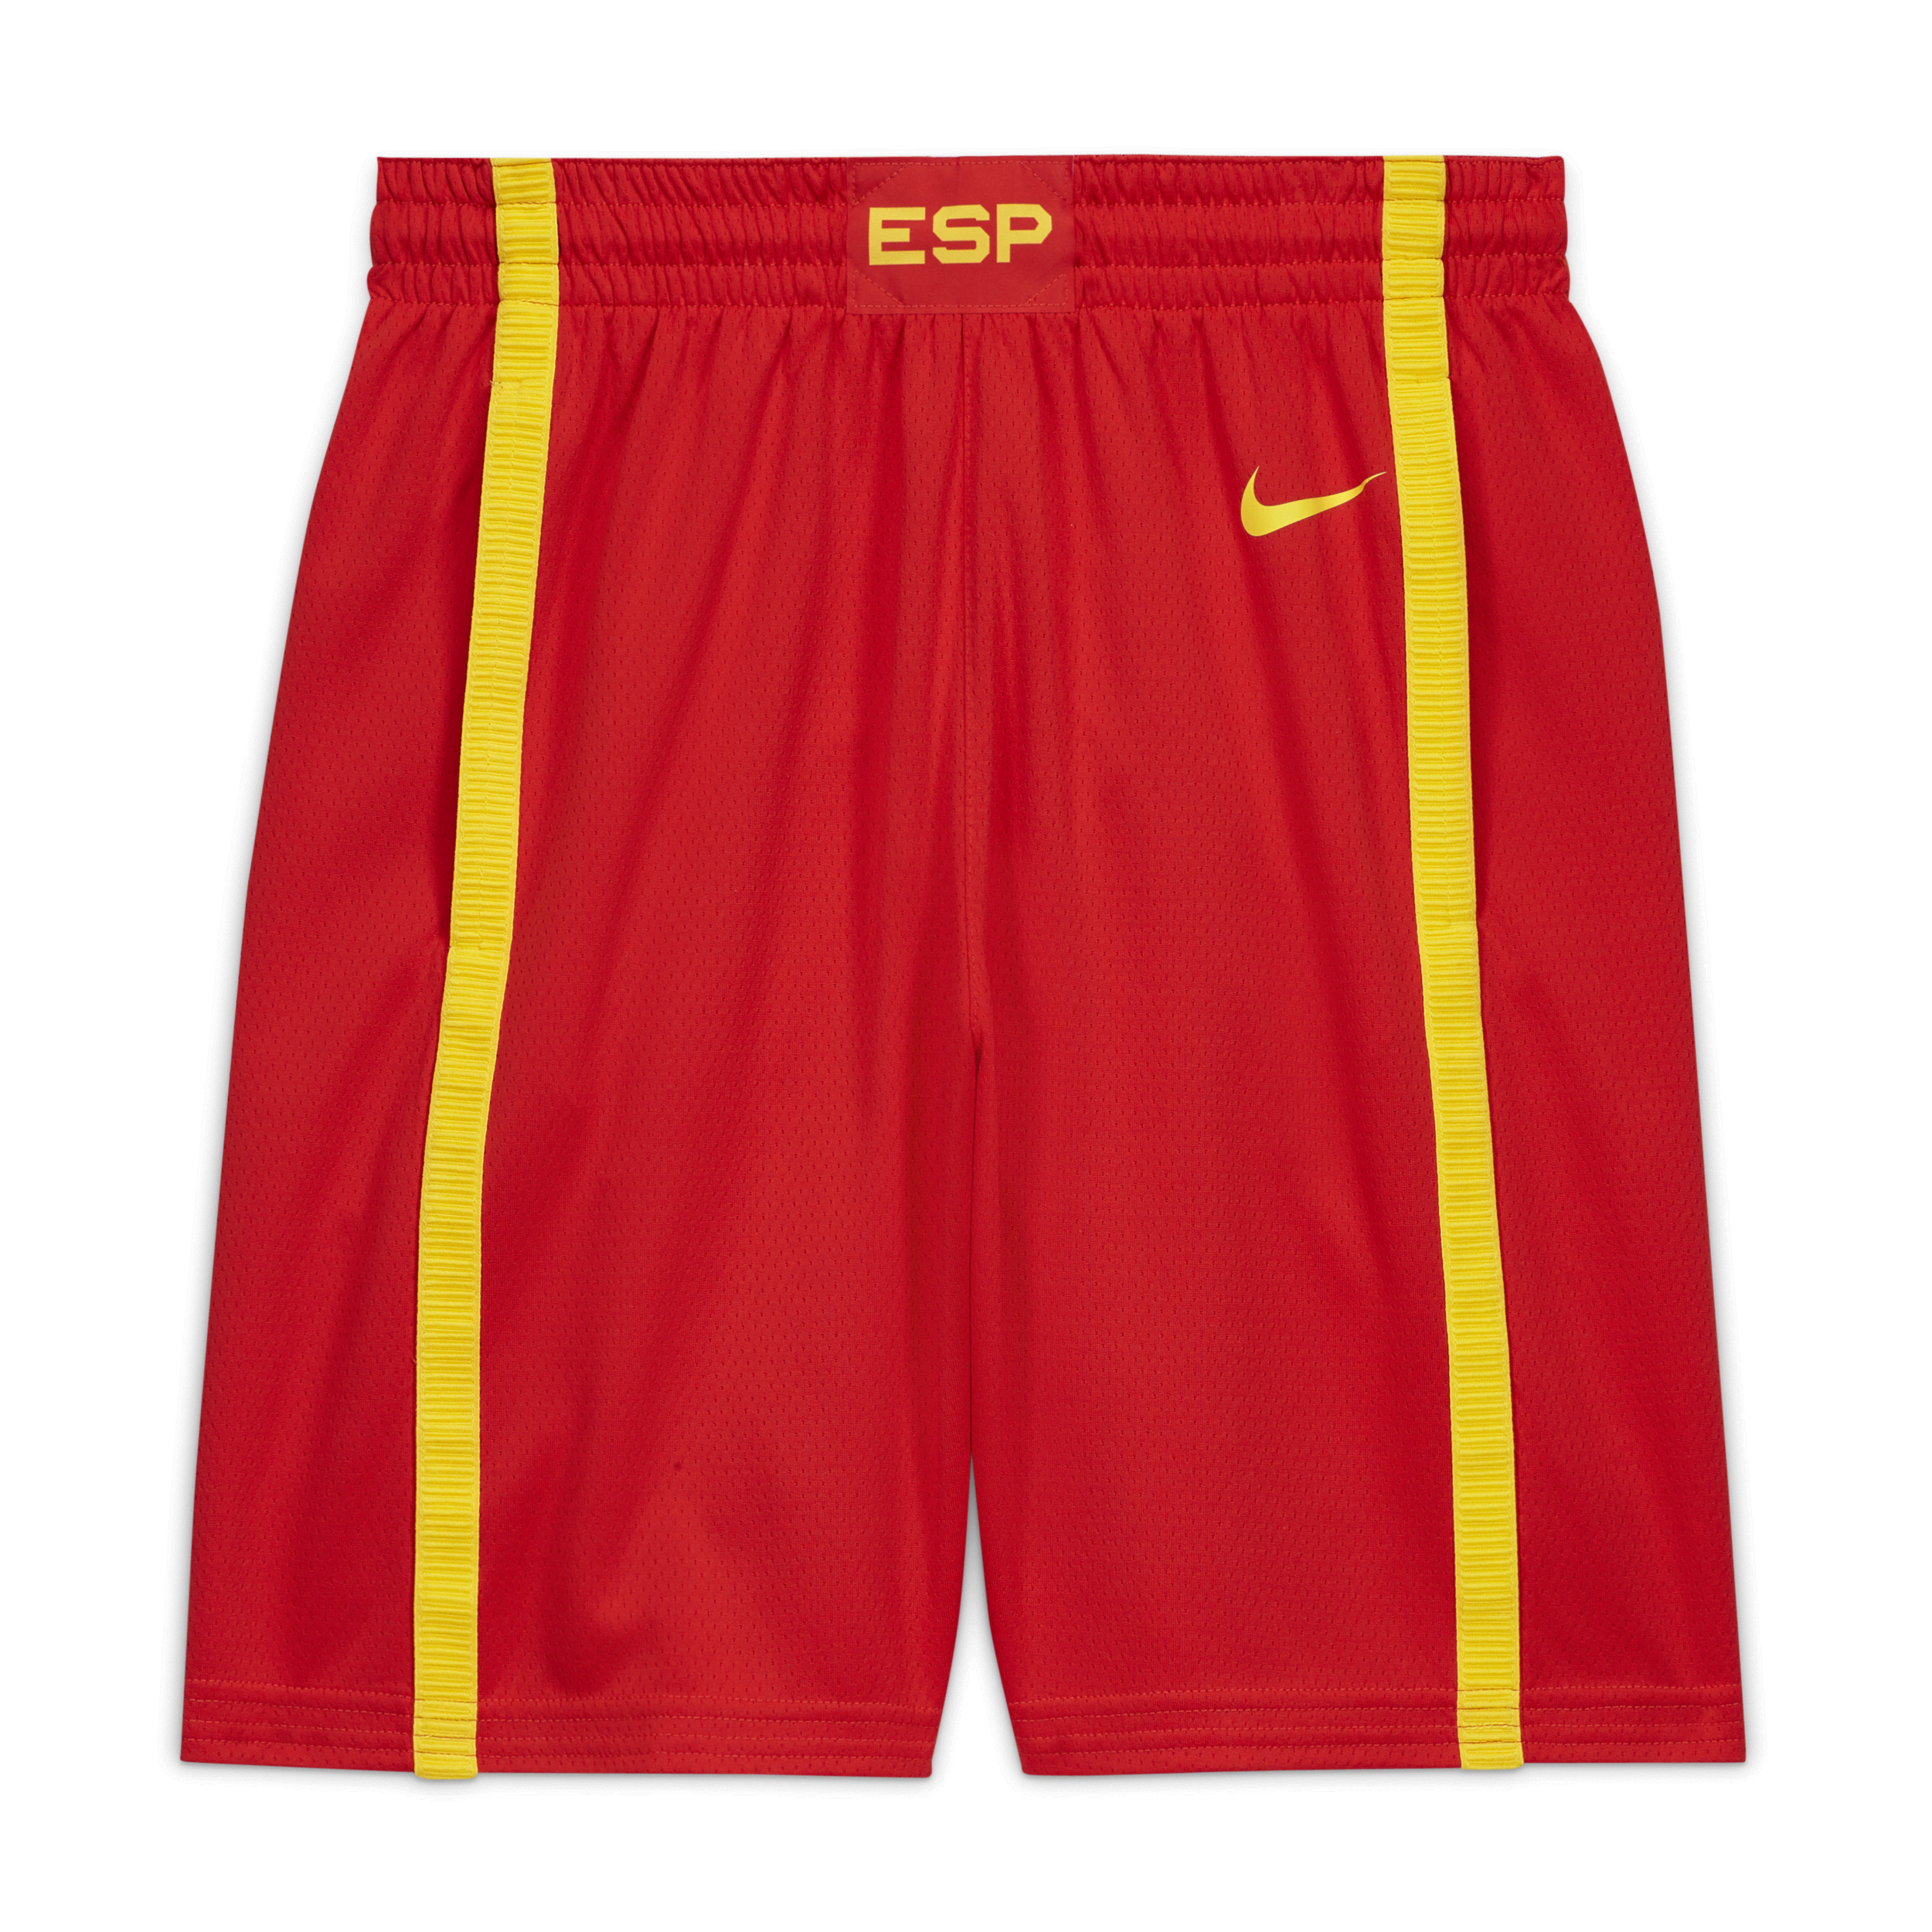 Spanje Nike (Road) Limited Basketbalshorts voor heren - Rood